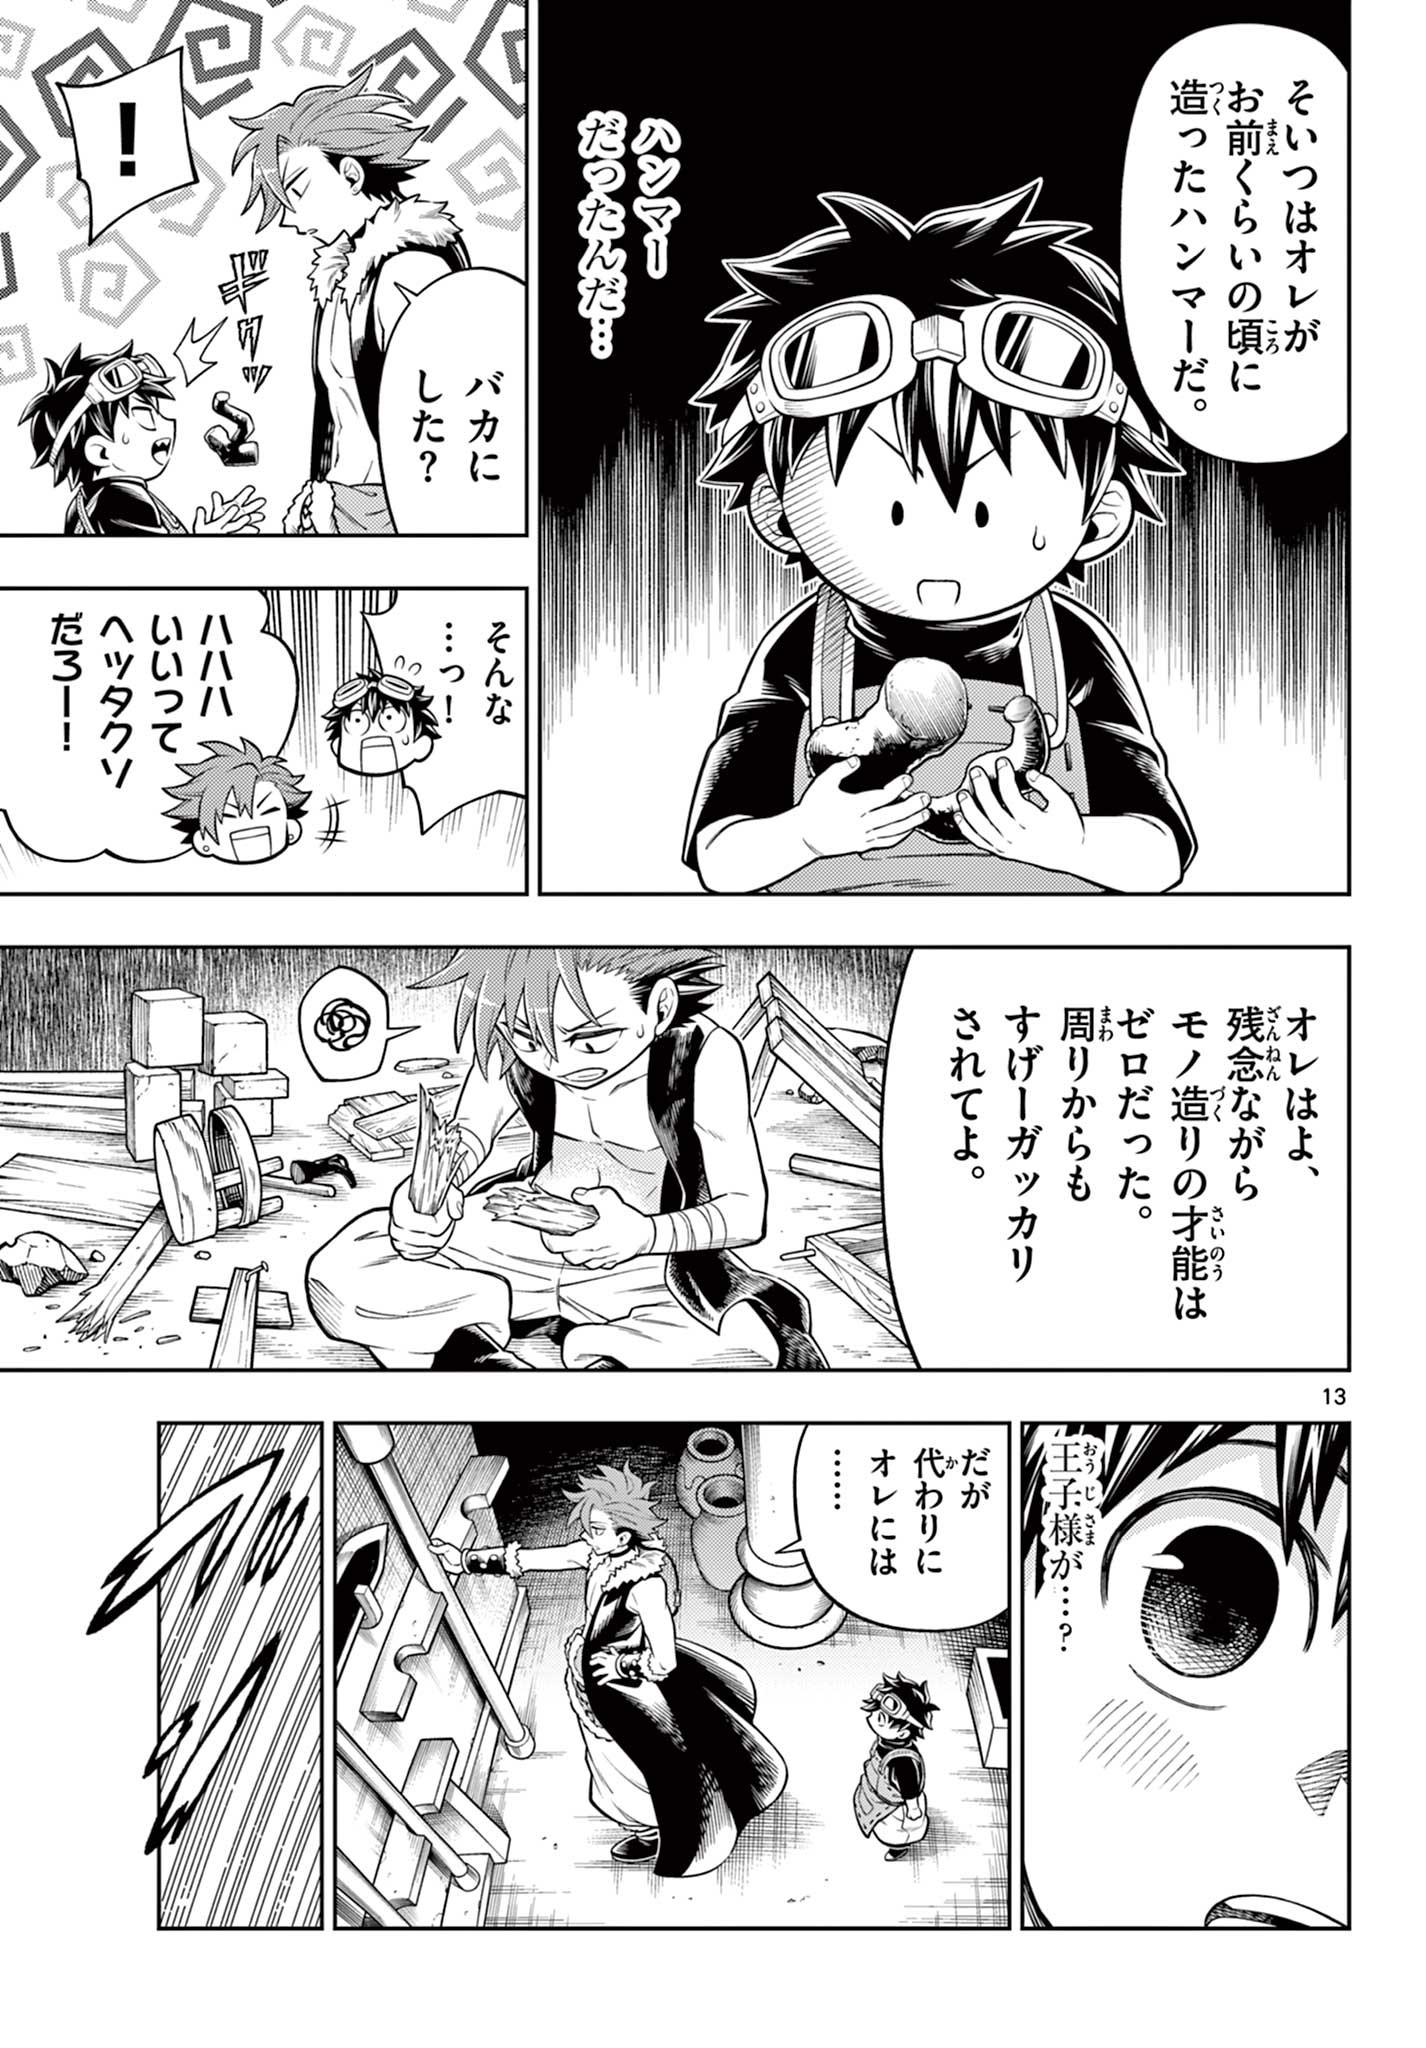 Soara to Mamono no ie - Chapter 23 - Page 13